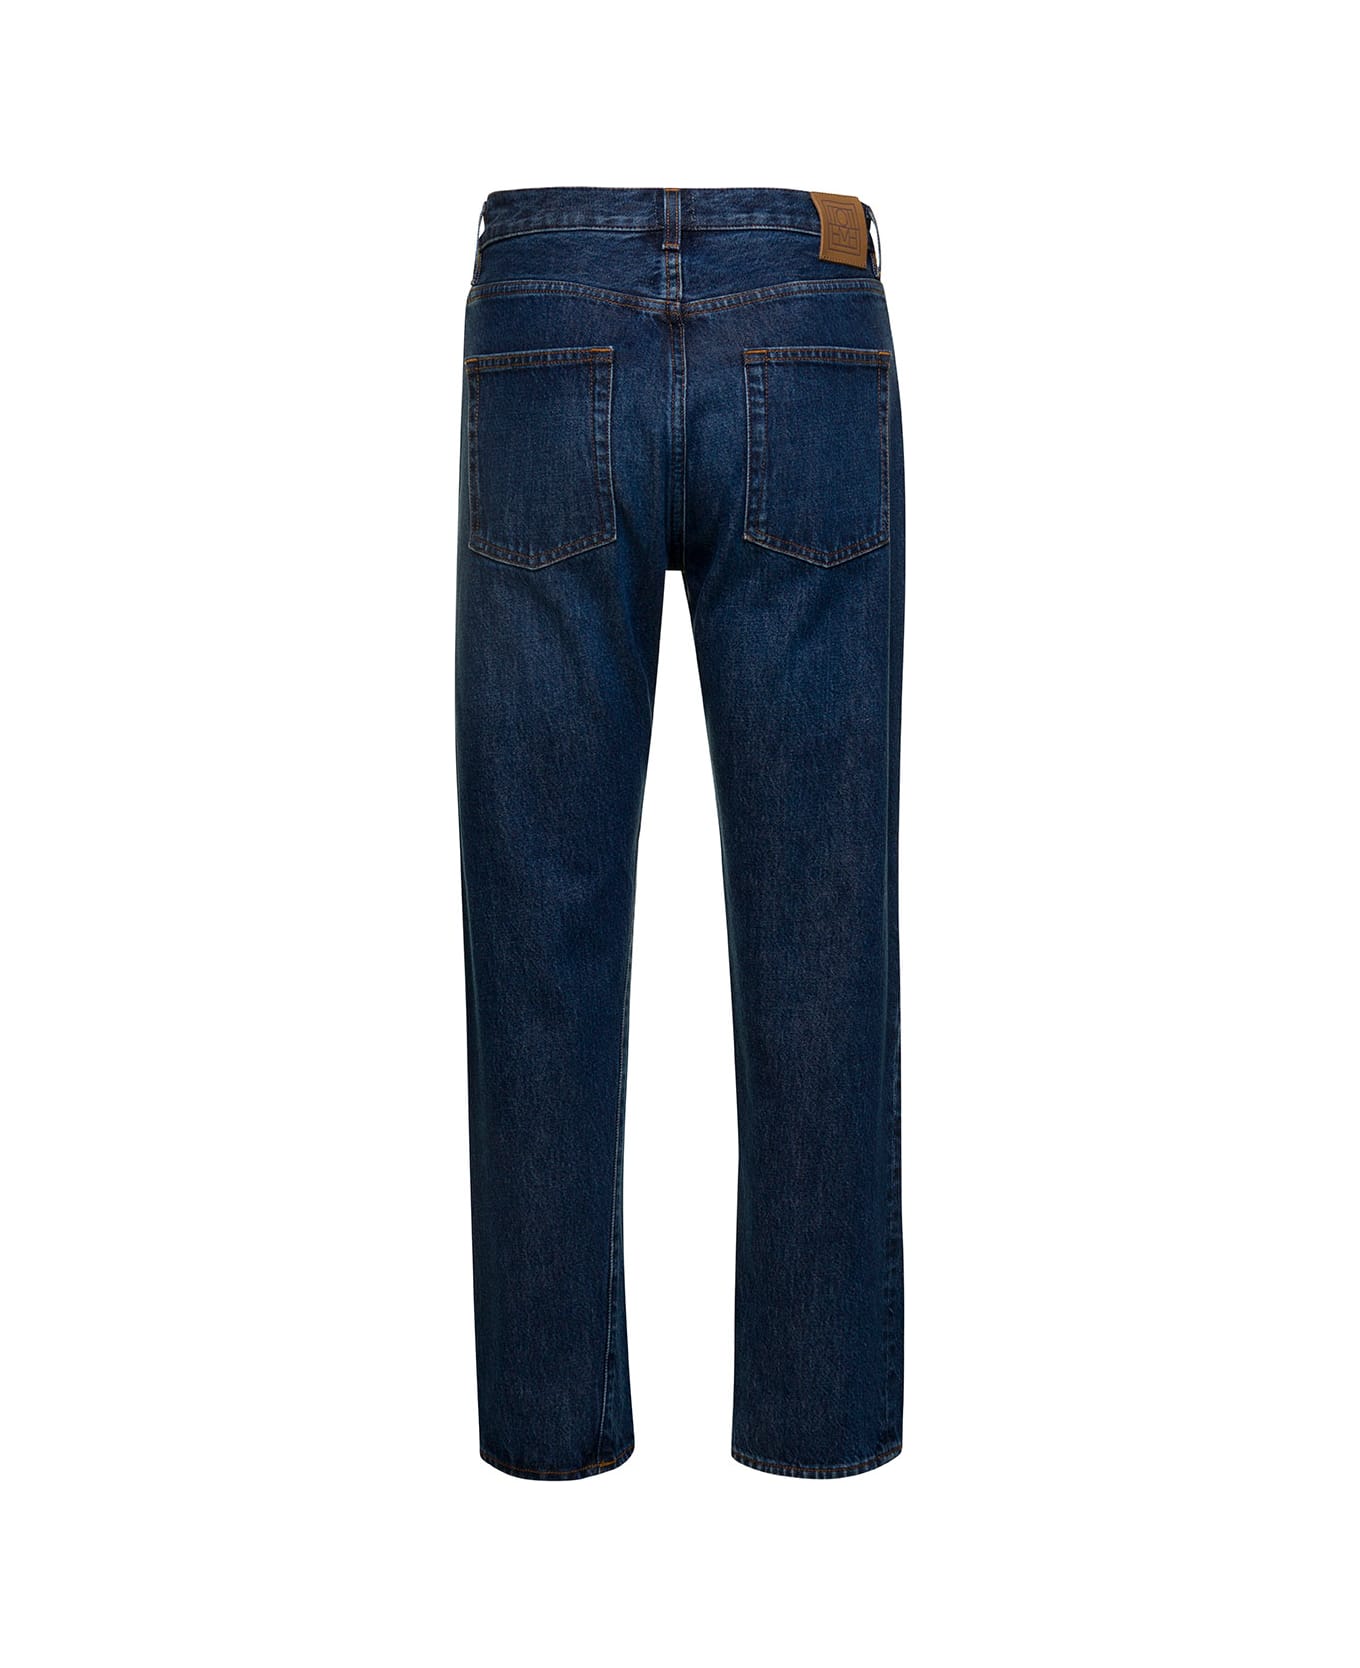 Totême Cropped Straight Jeans In Blue Denim Cotton Woman - Blu デニム